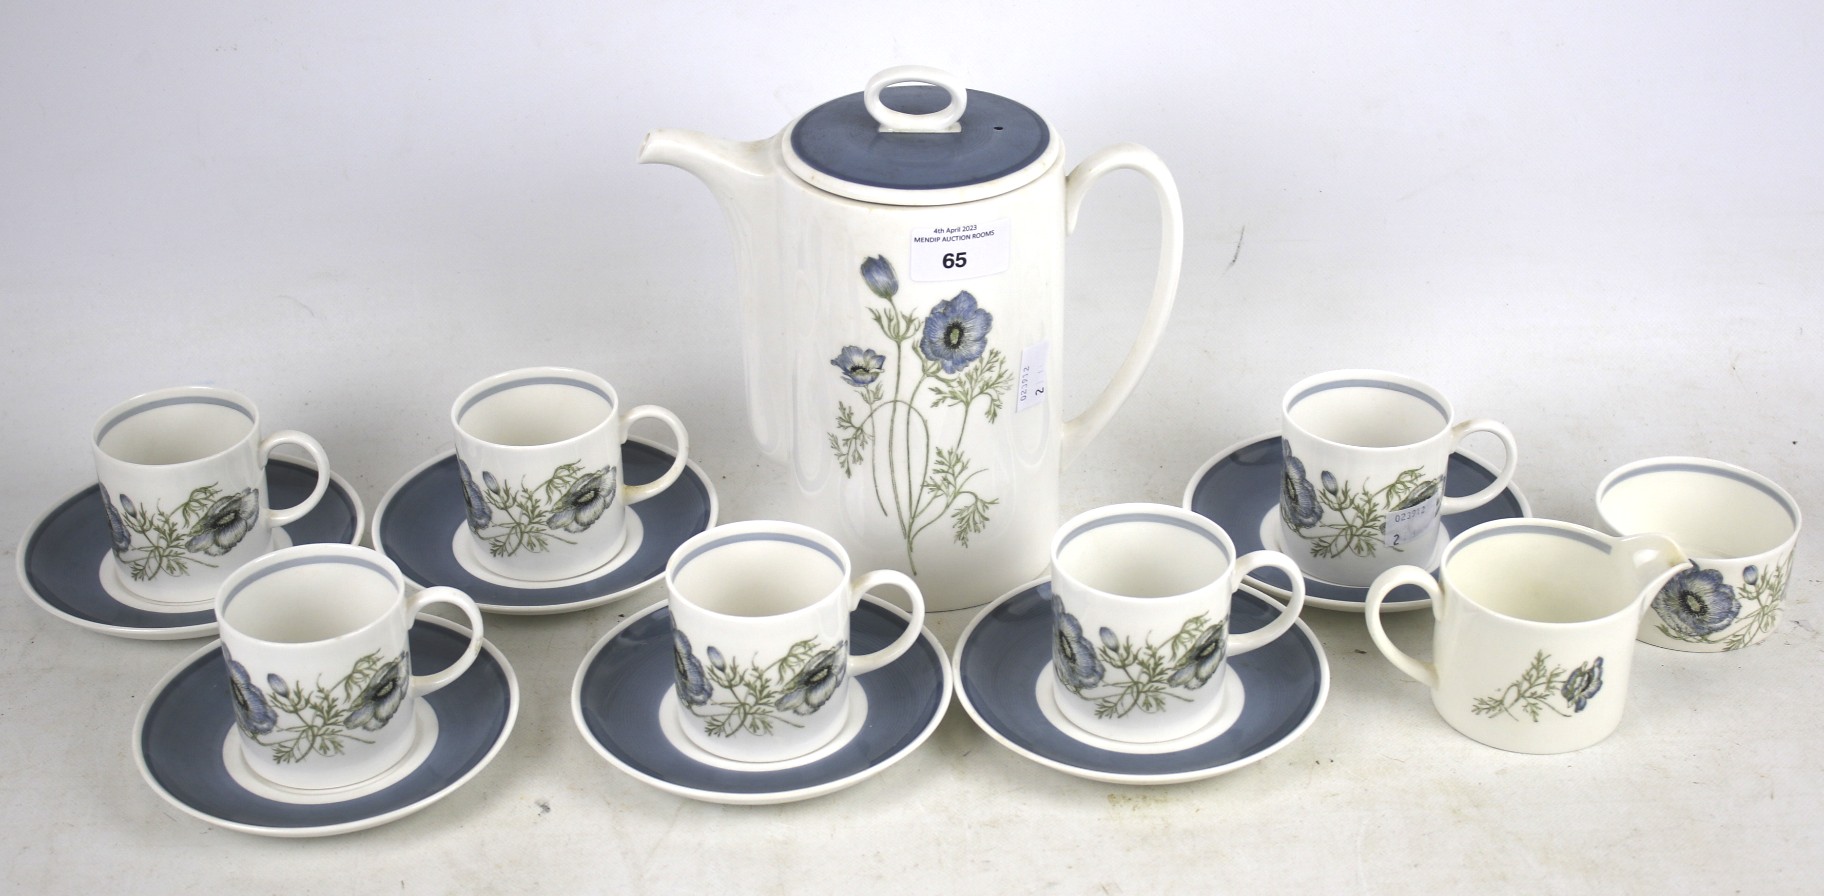 A six piece Suzie Cooper tea service in the 'Glen Mist' pattern.